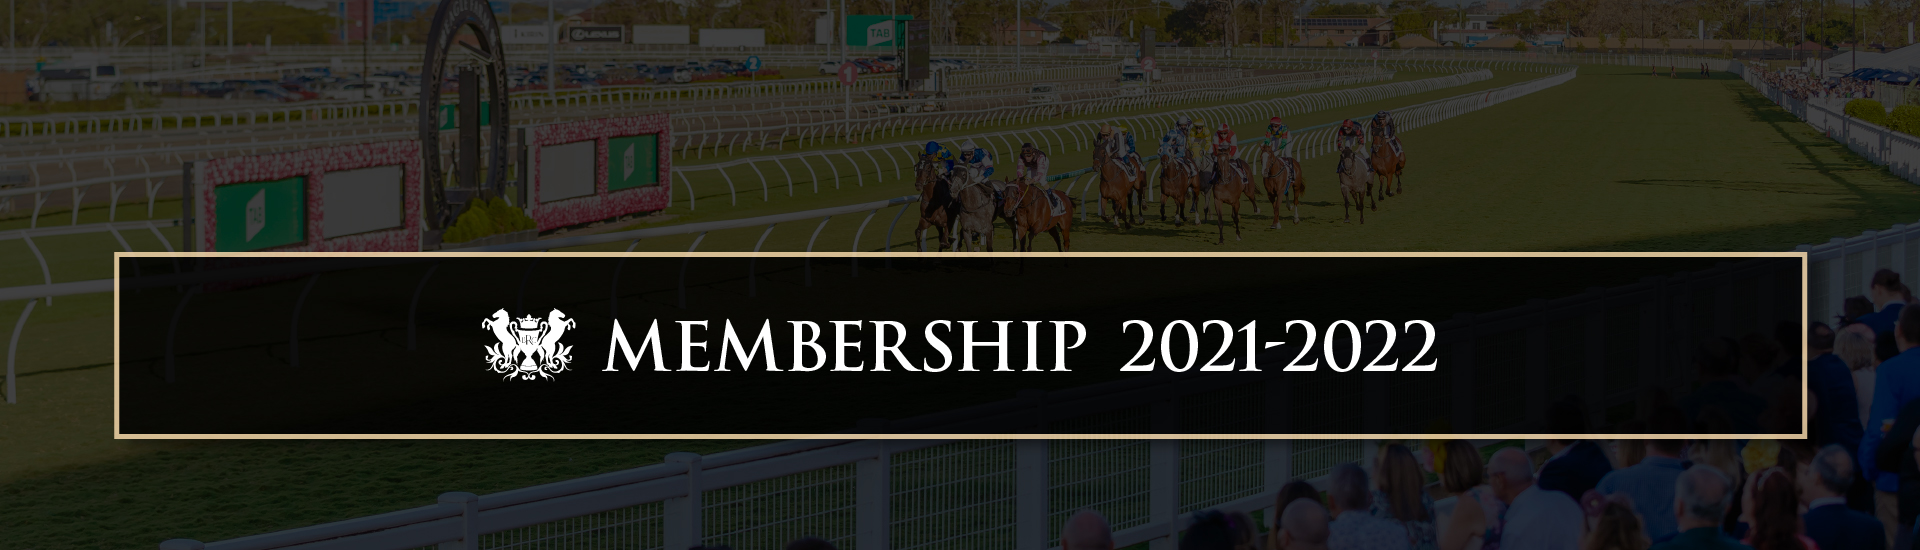 21-22-Membership_Webpage-Banner_1920x550_generic2 | Brisbane Racing Club